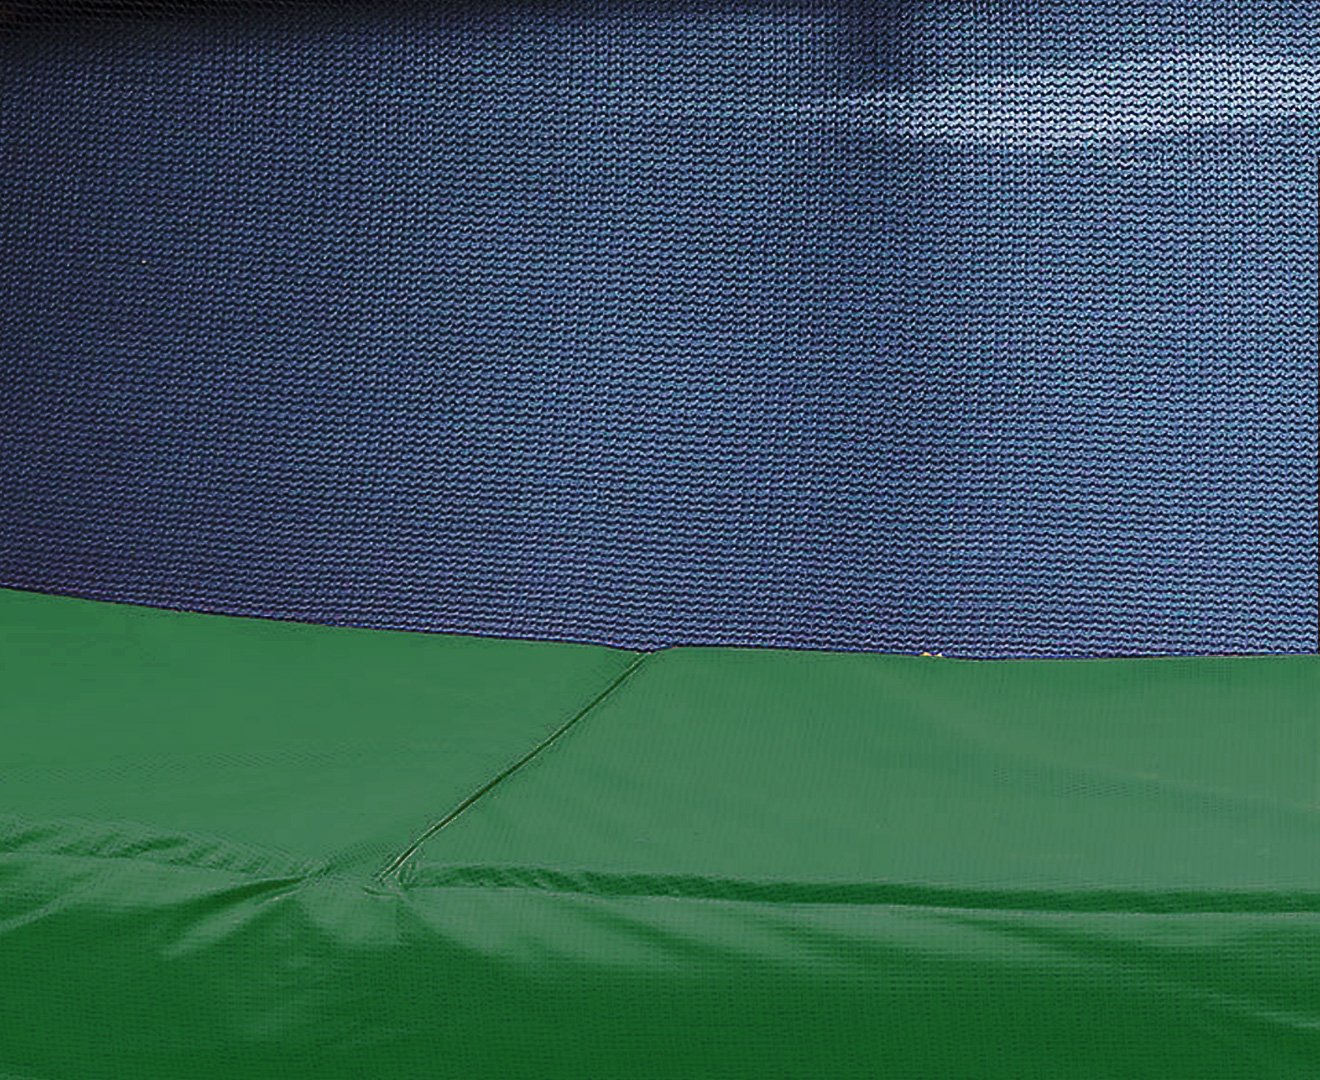 Trampoline 16 ft Kahuna with Basketball set - Green